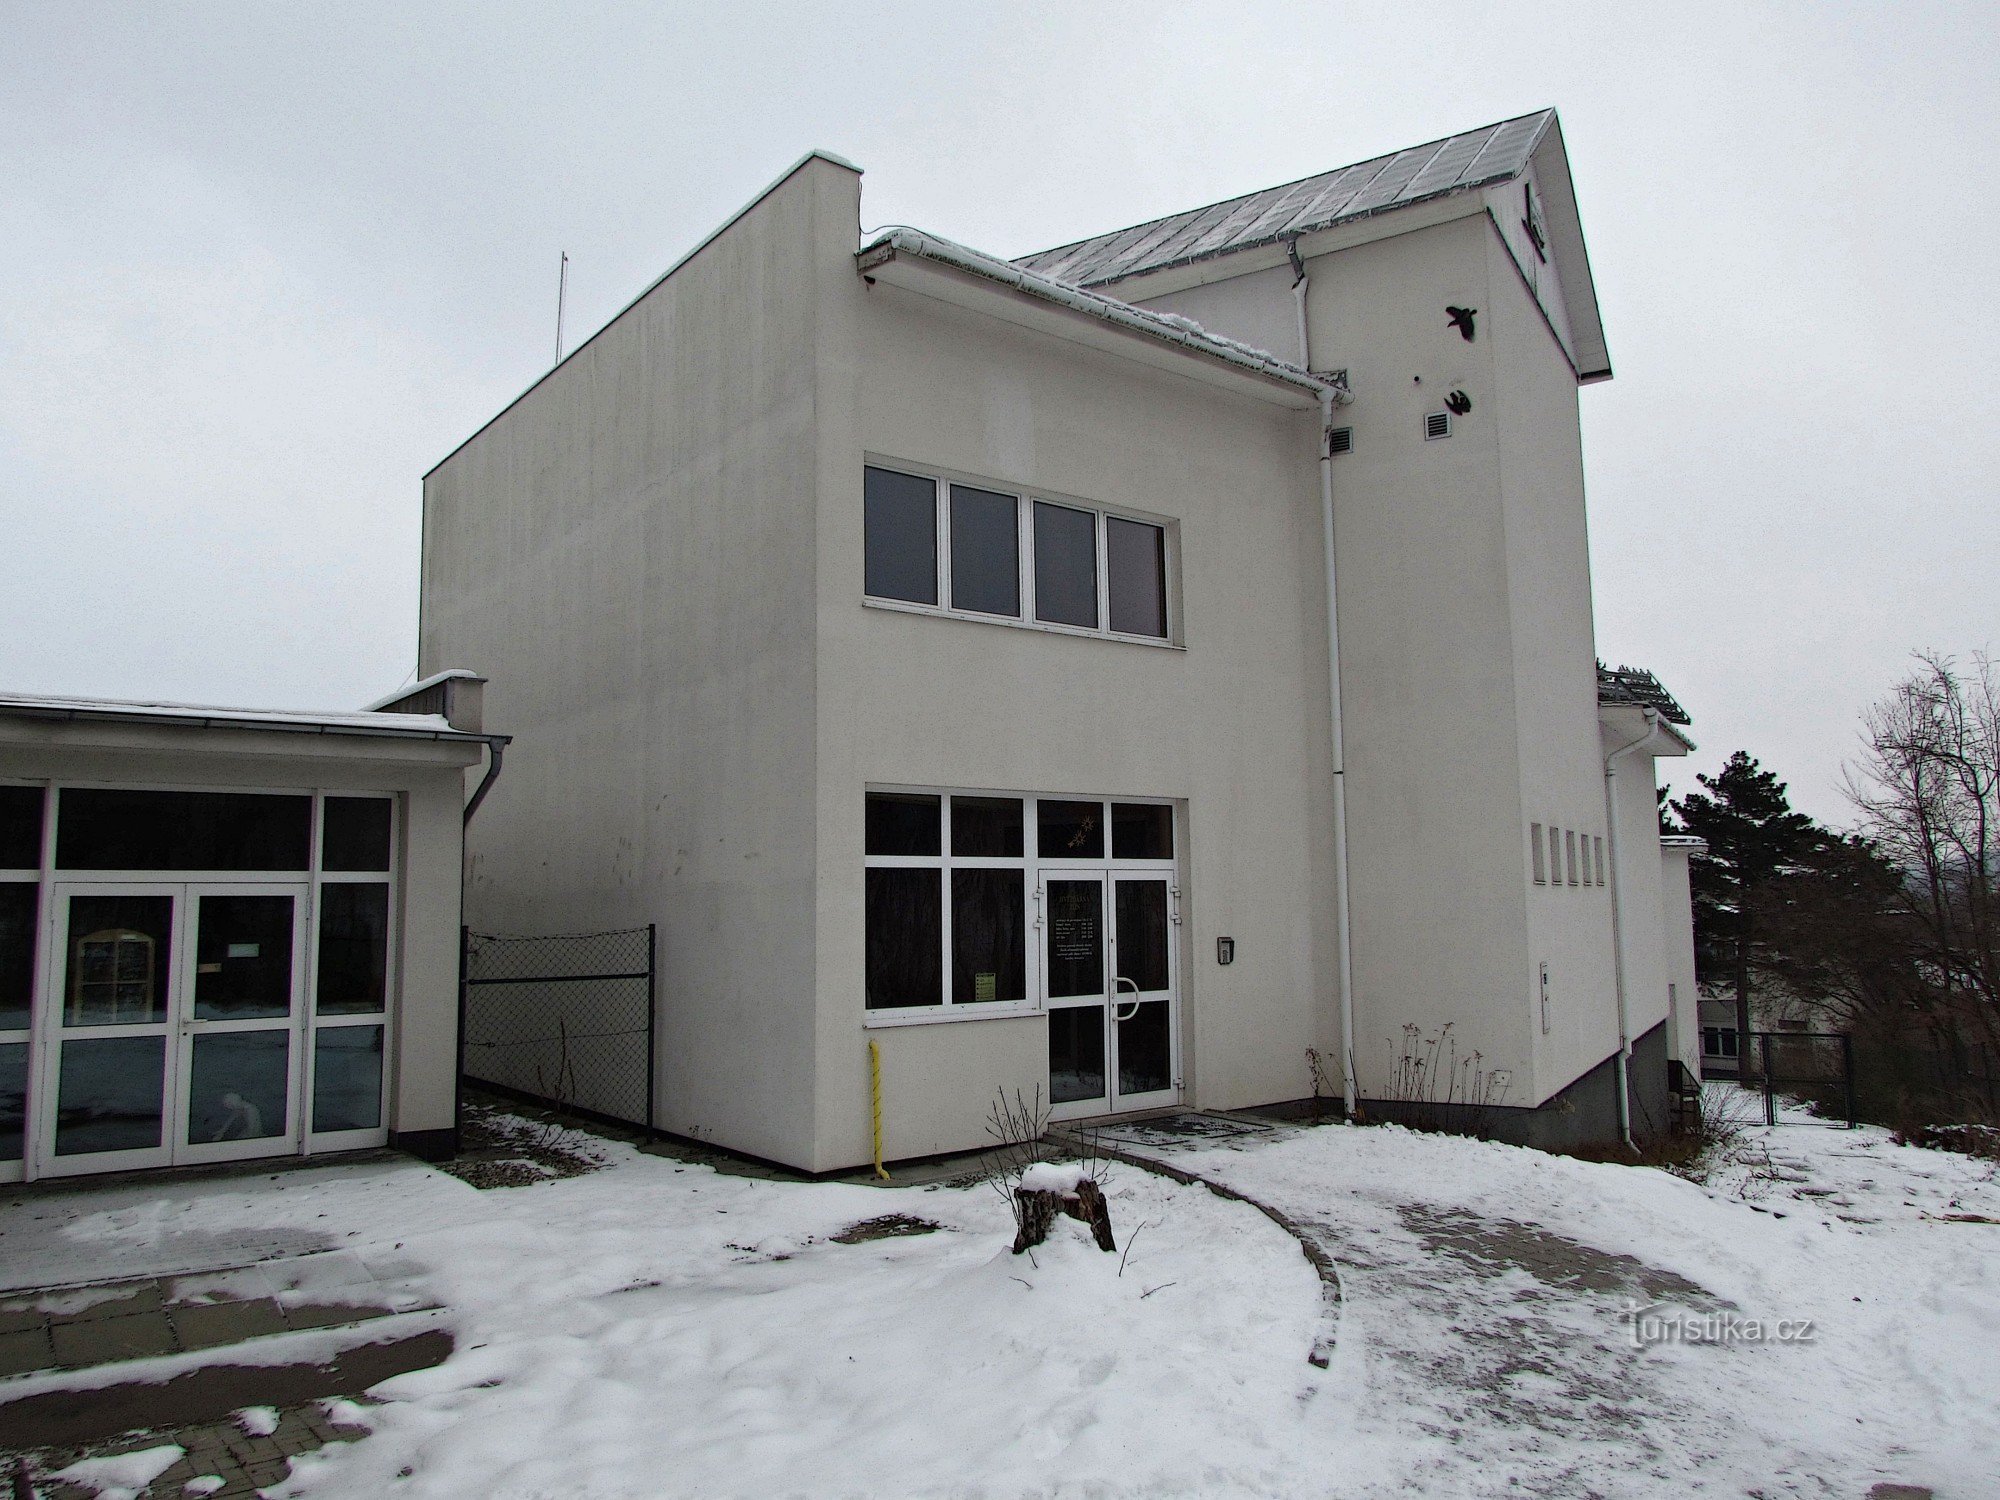 Zlín - observatorium